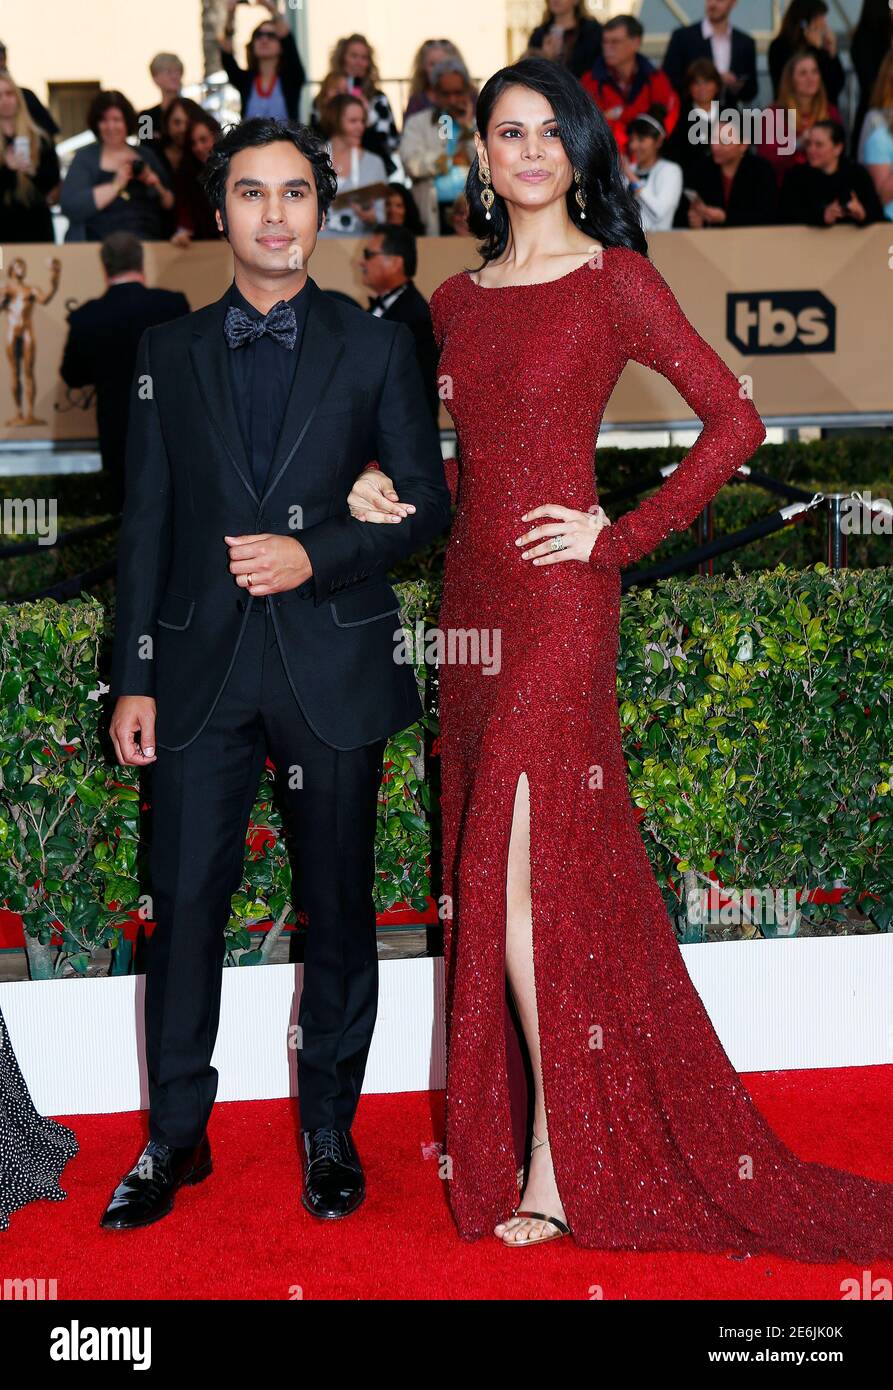 L'attore Kunal Nayyar della serie commedia 'The Big Bang Theory' e sua moglie Neha Kapur arrivano al 22° Screen Actors Guild Awards a Los Angeles, California, 30 gennaio 2016. REUTERS/Mike Blake Foto Stock